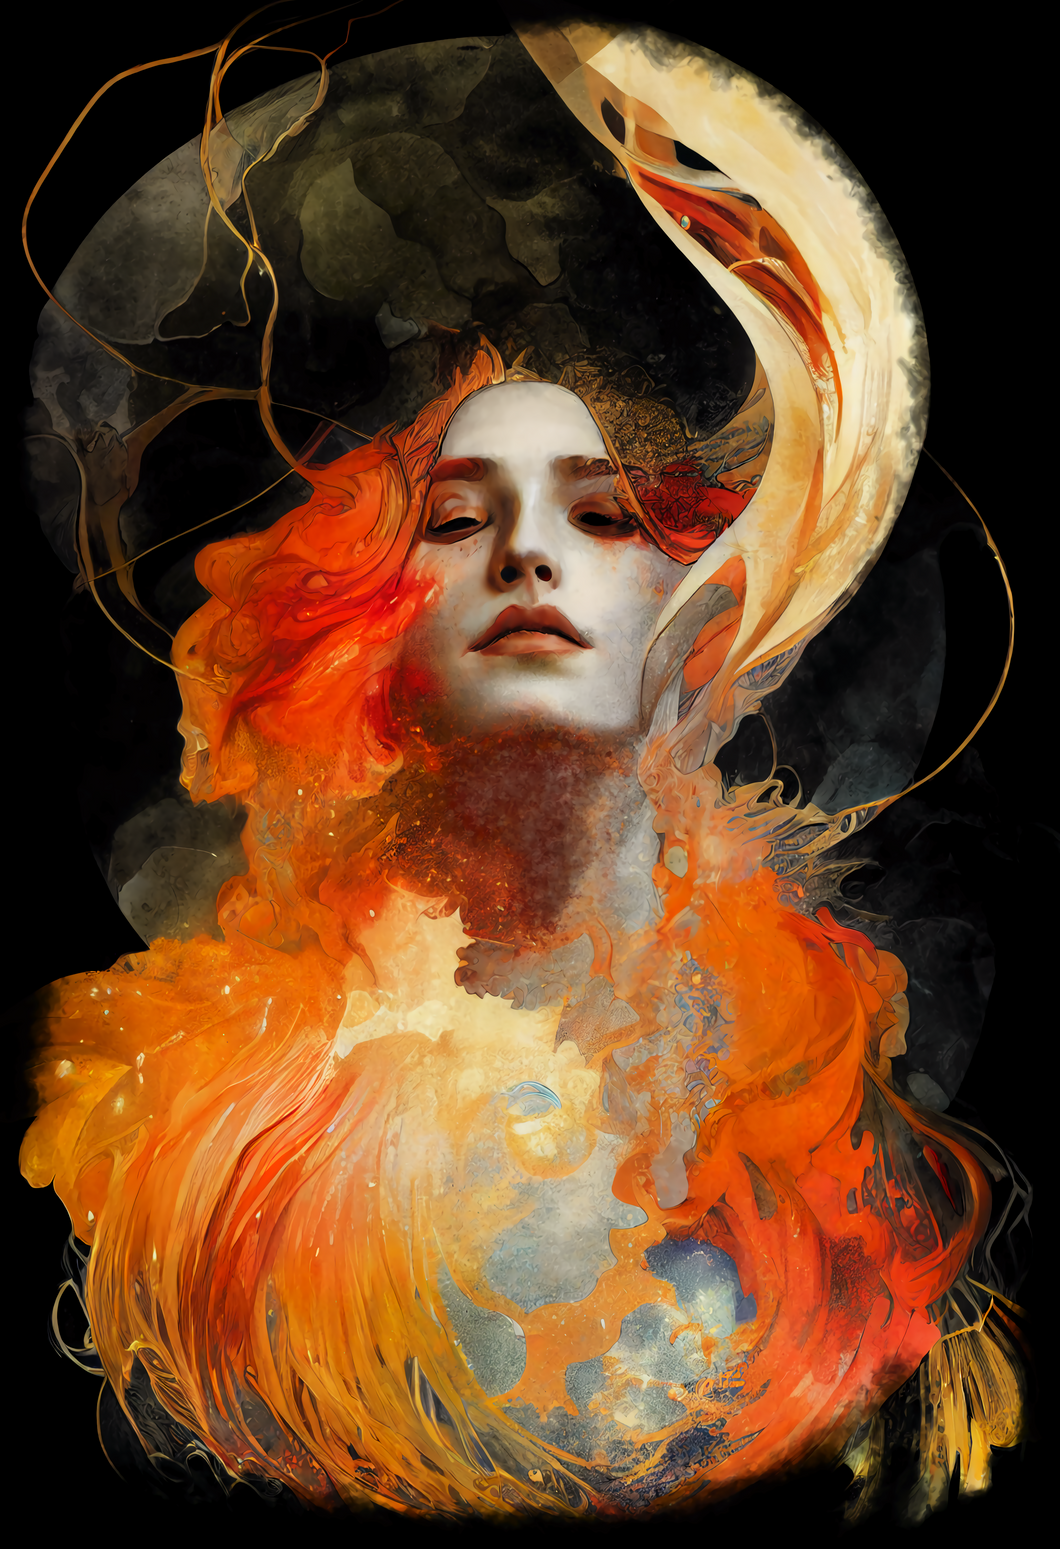 *PREORDER* Goddess of Fire #5 by CJ